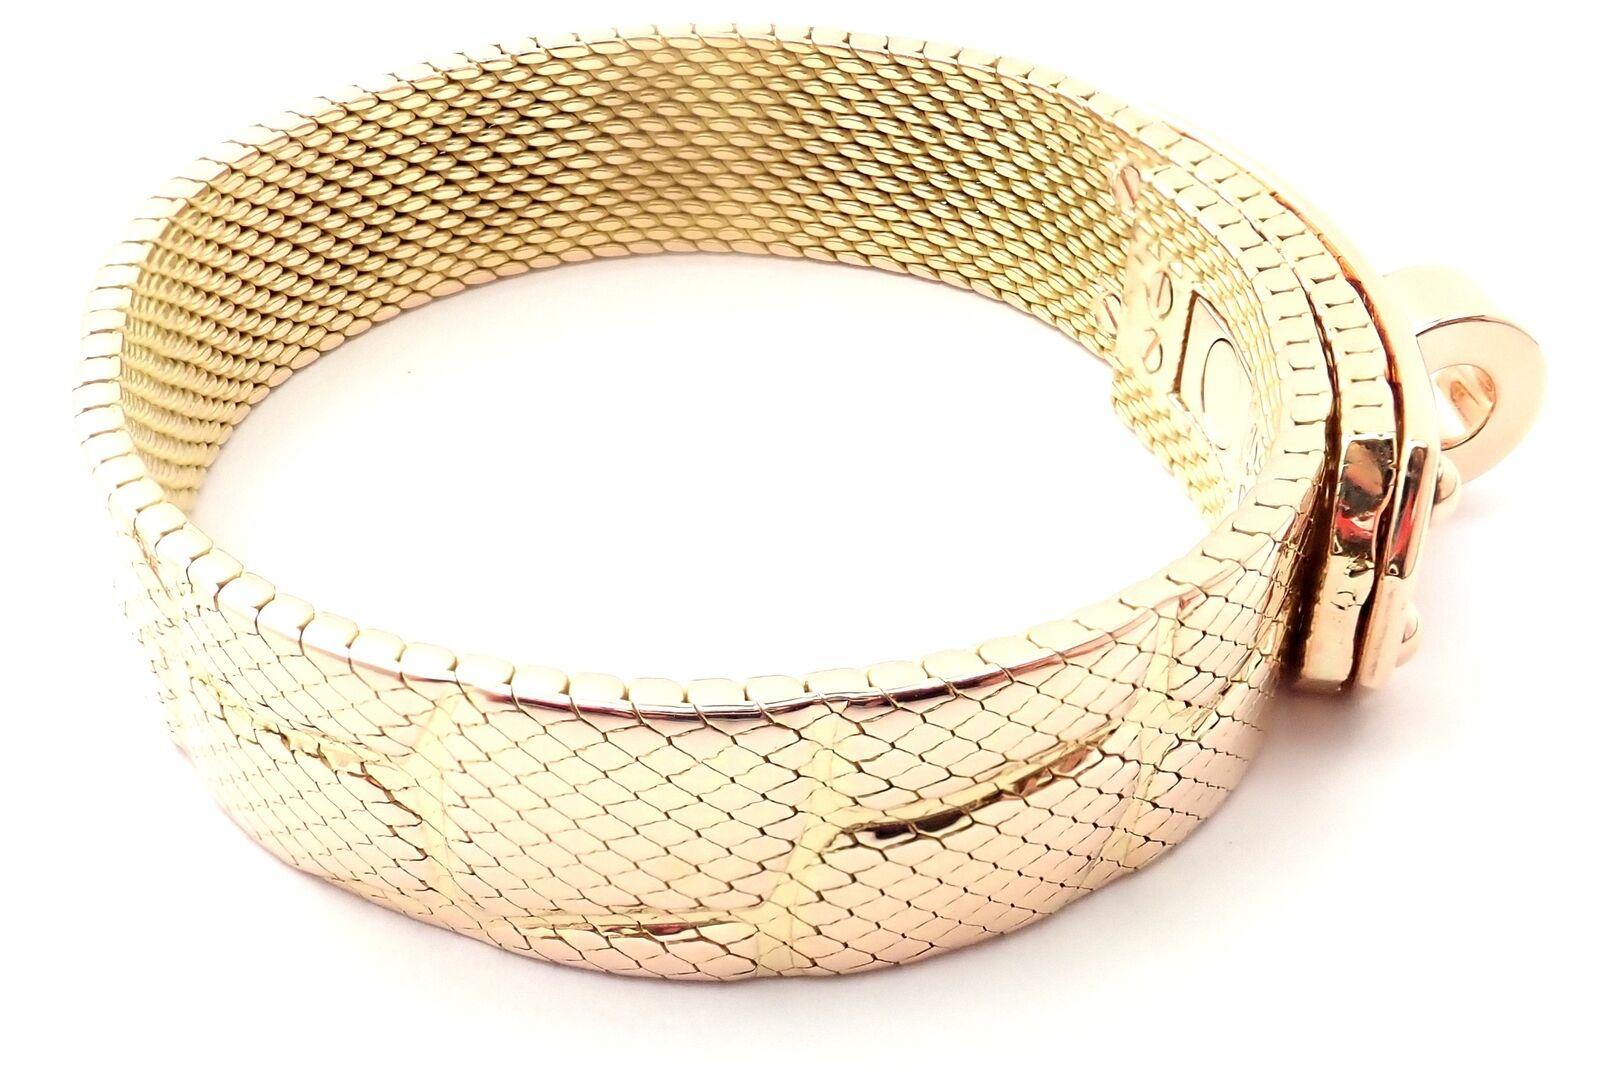 18k Rose Gold Medium Model Kelly Bracelet by Hermes. 
Details: 
Size: Length: 6.5